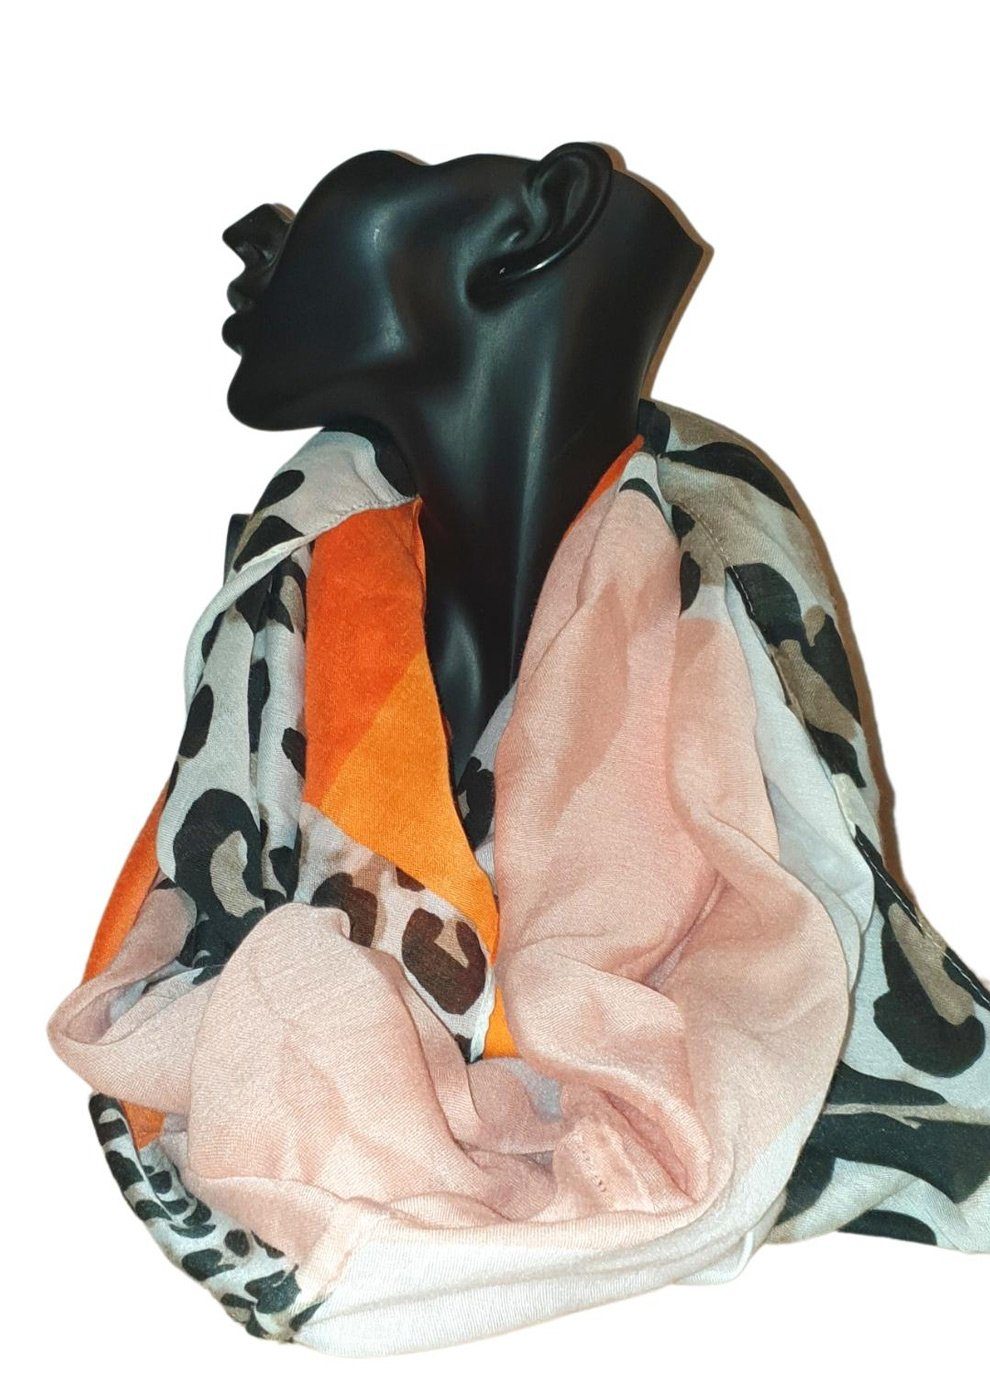 Charis Moda Schal Schlauchschal Mustermixed Animal Print Orange - Bunt | Modeschals